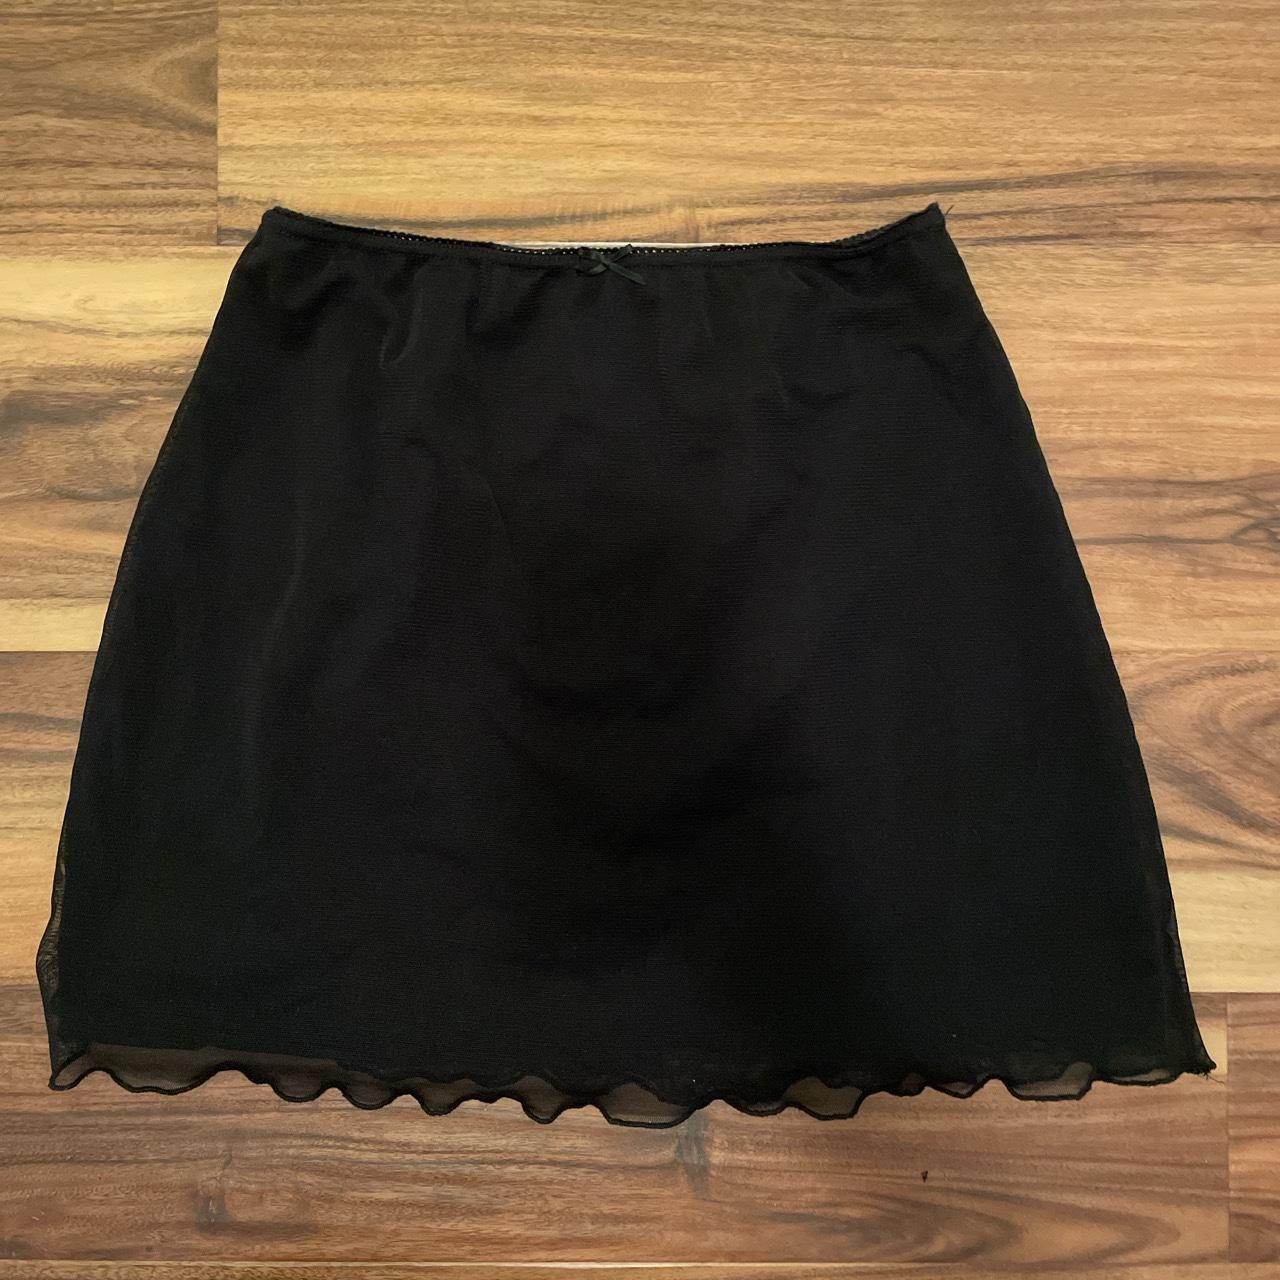 Brandy Melville Ciara skirt🖤 this flowy skirt comes... - Depop